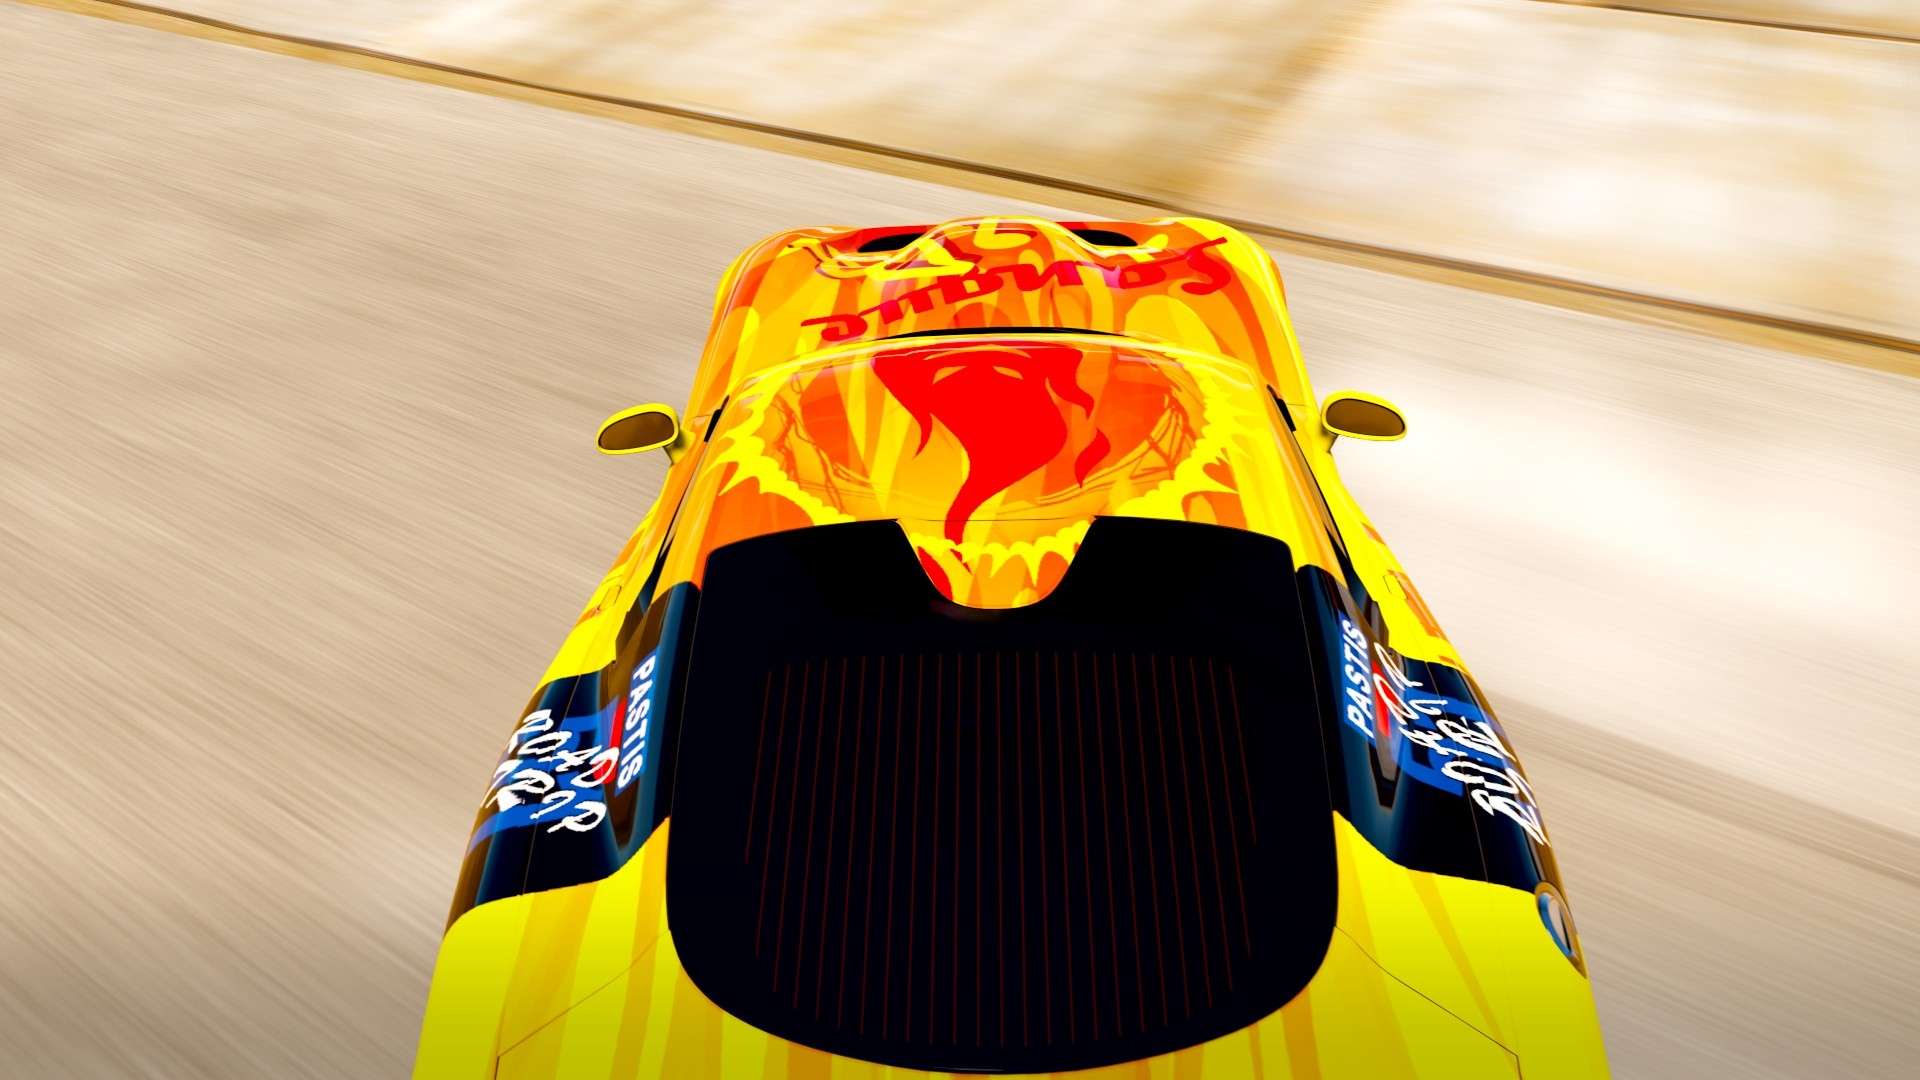 Forza Horizon 2 - Photos de vos voitures en mode déco. (Exposé vos livré) Getpho34